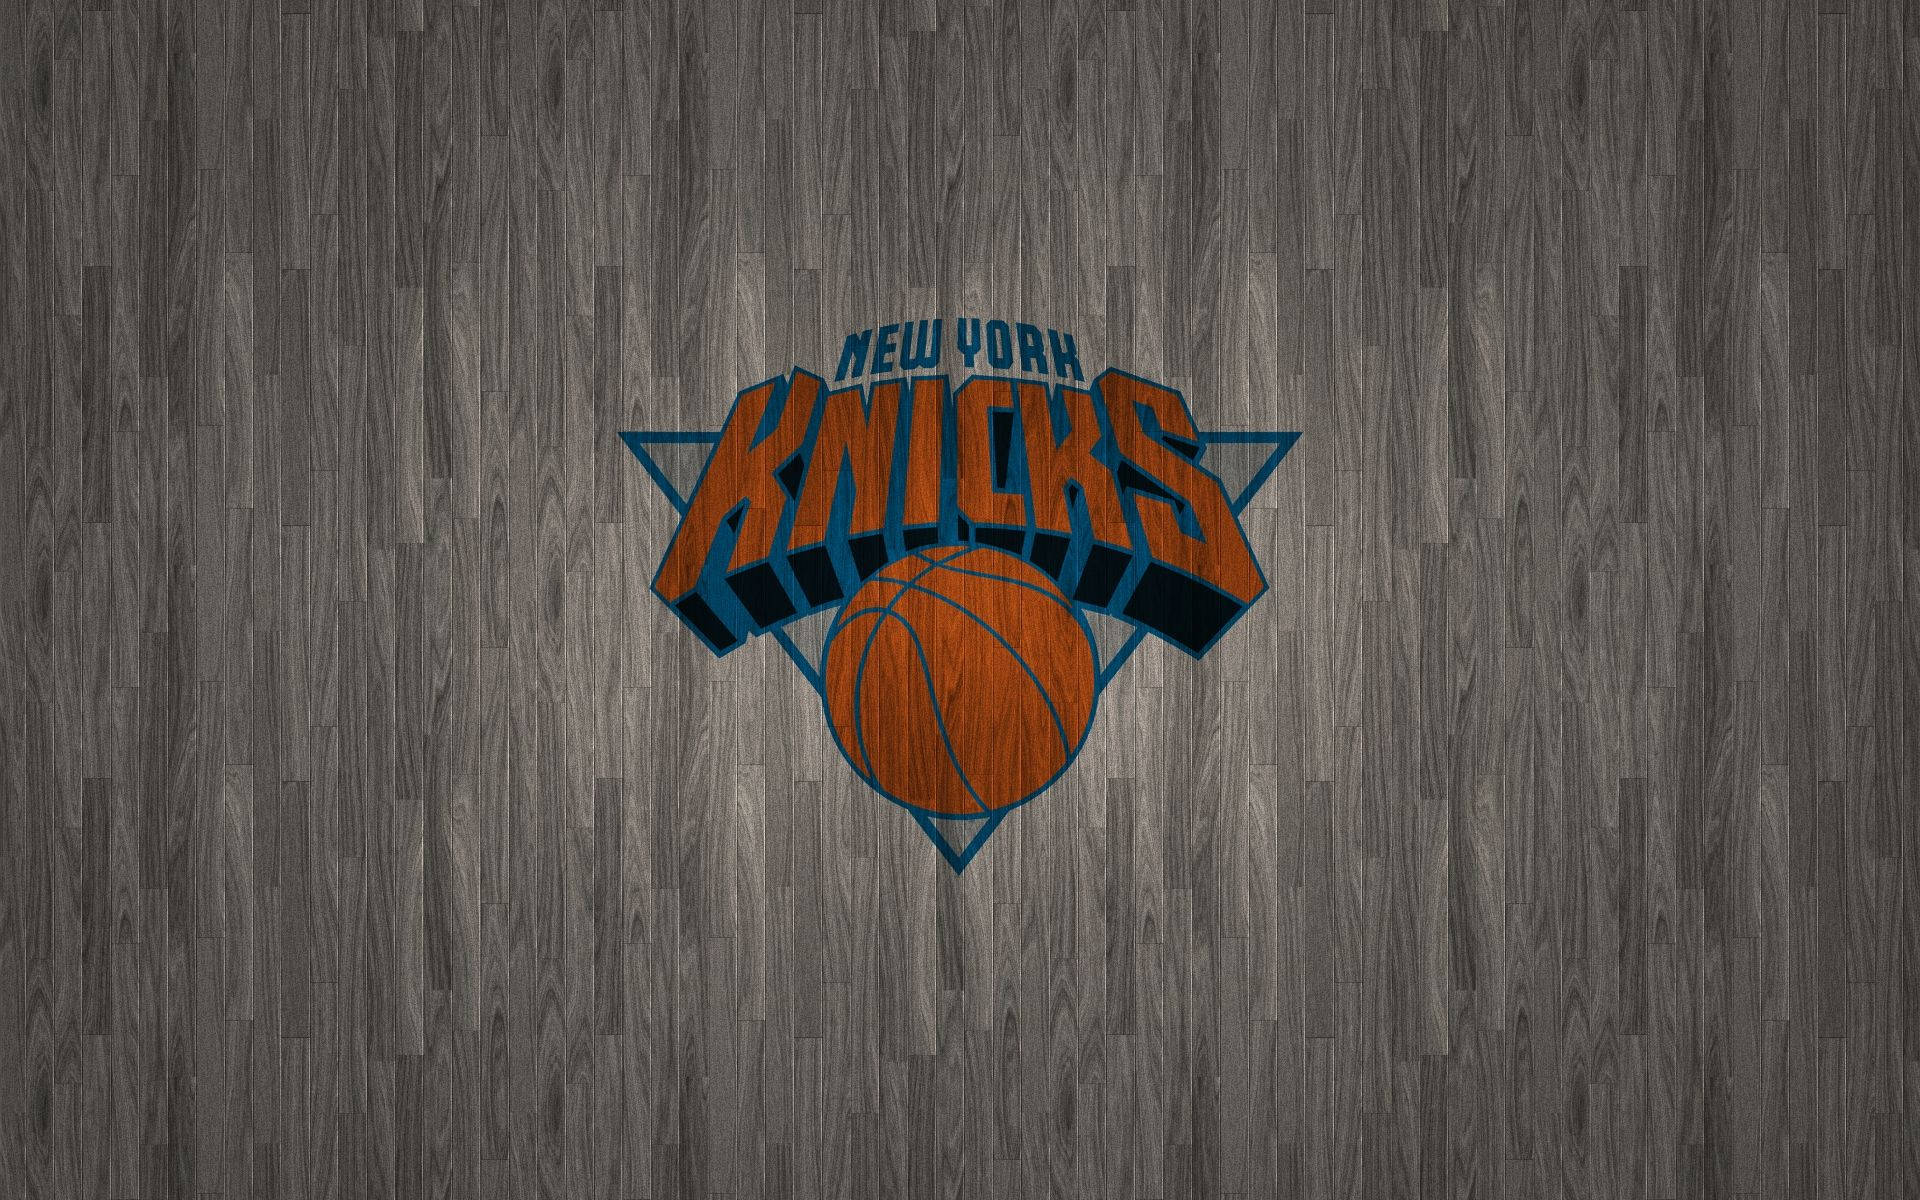 New York Knicks Grey Wood Background